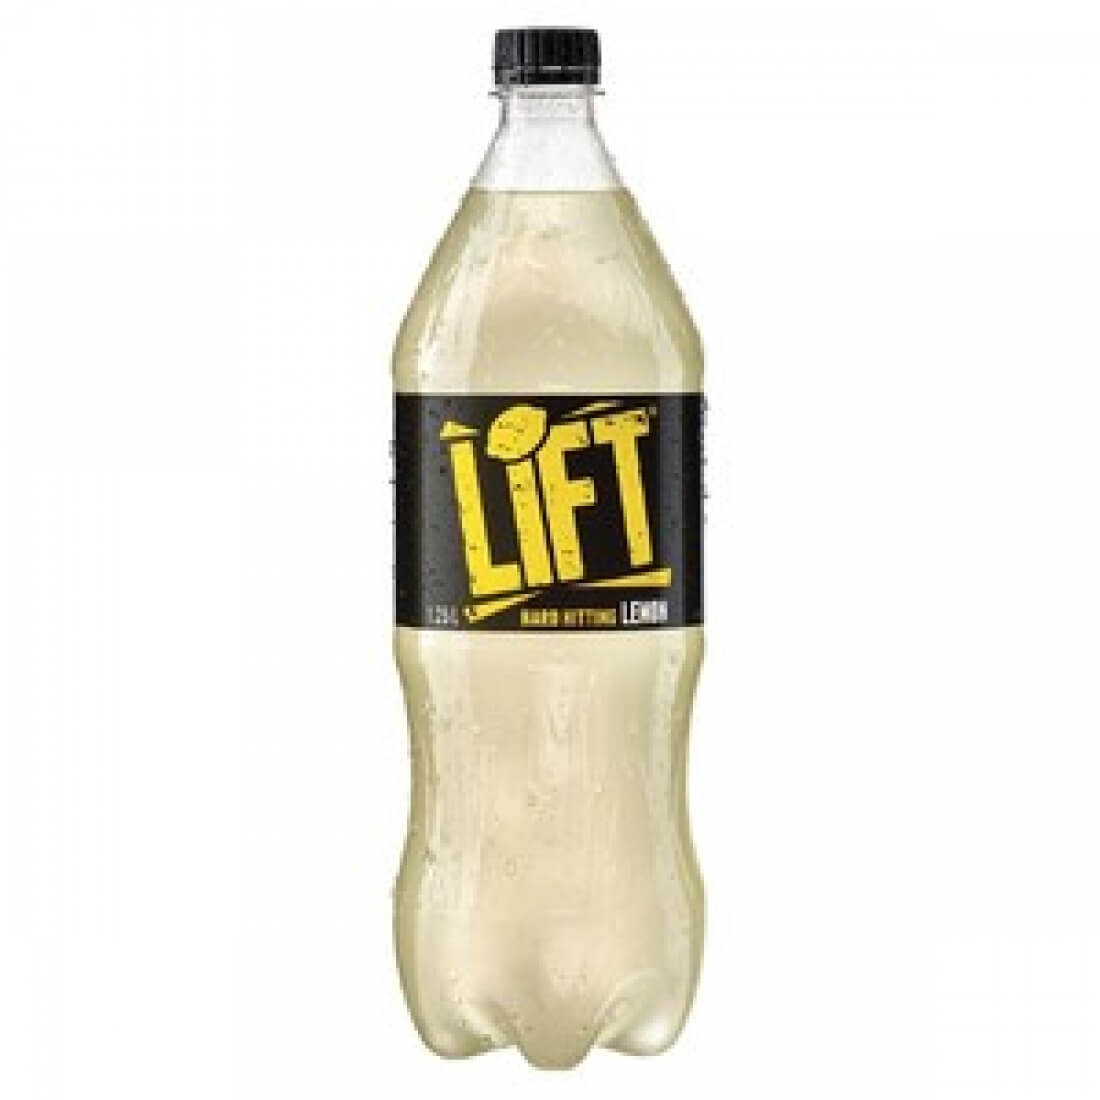 Lift (1.25L)